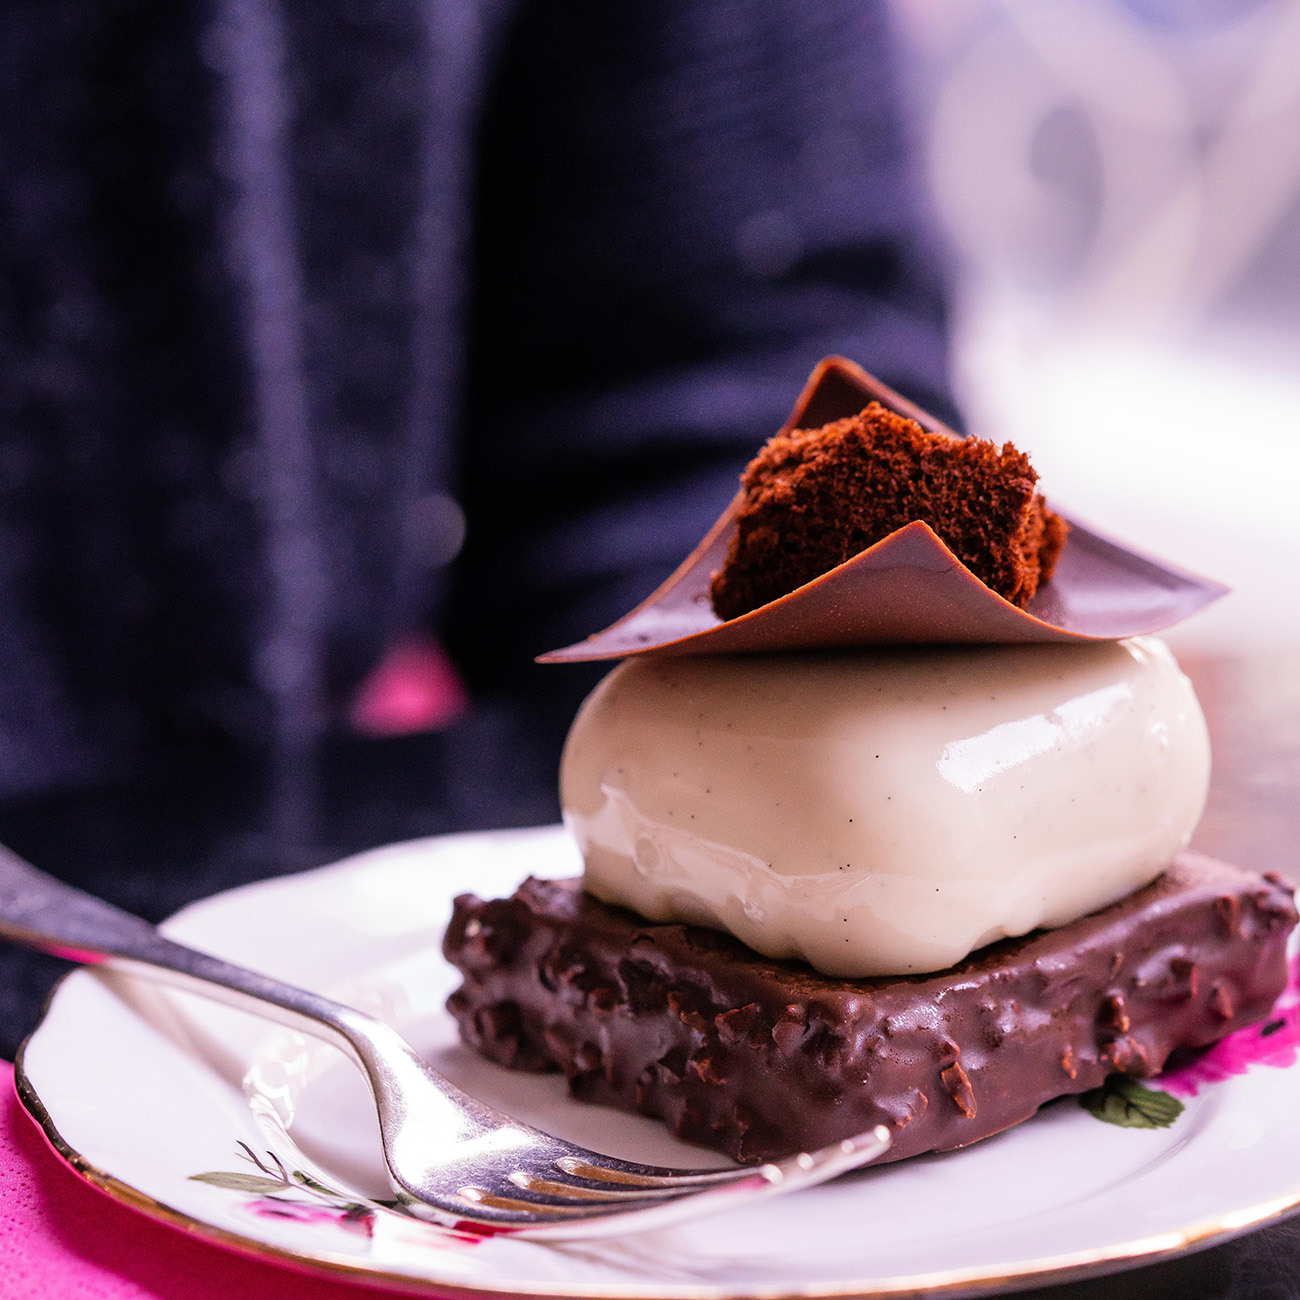 Best Desserts in the World - Chocolate Cake